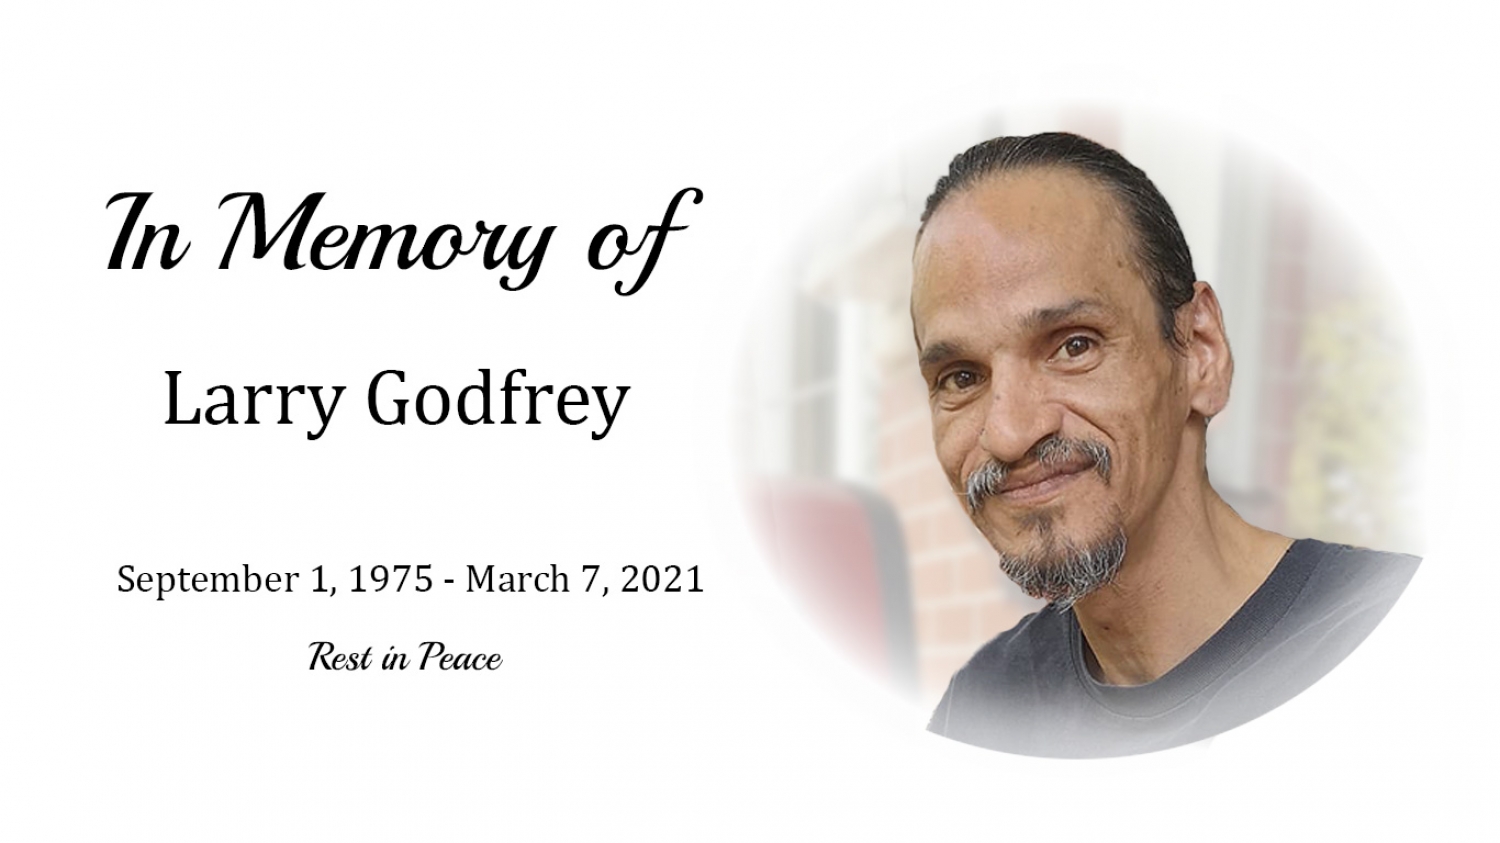 In Memory of Larry Godfrey